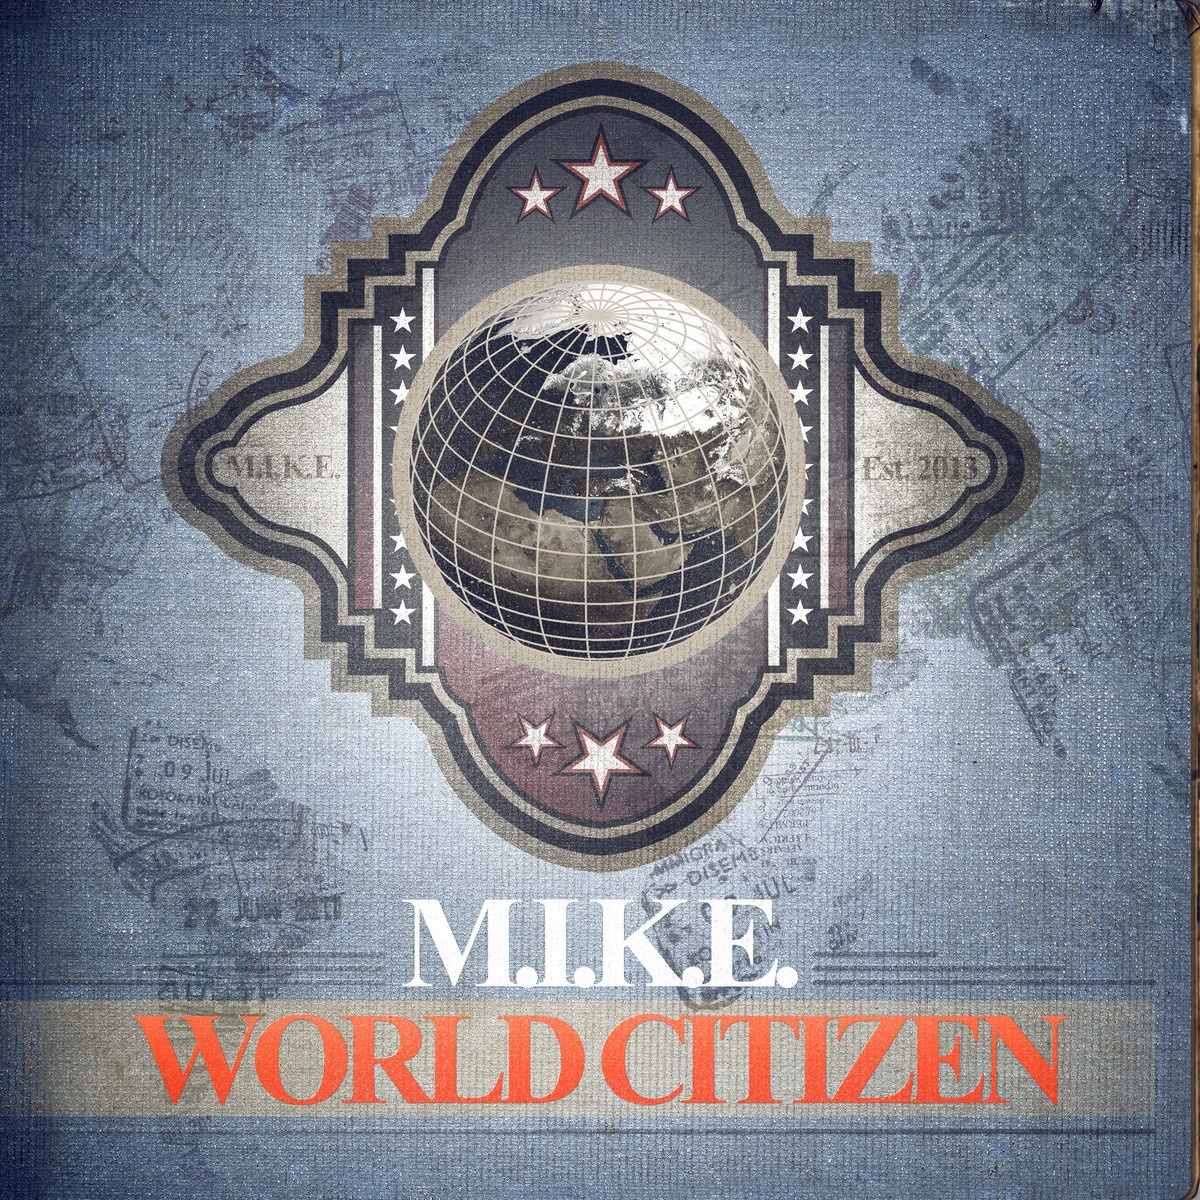 World Citizen (Album Mix)